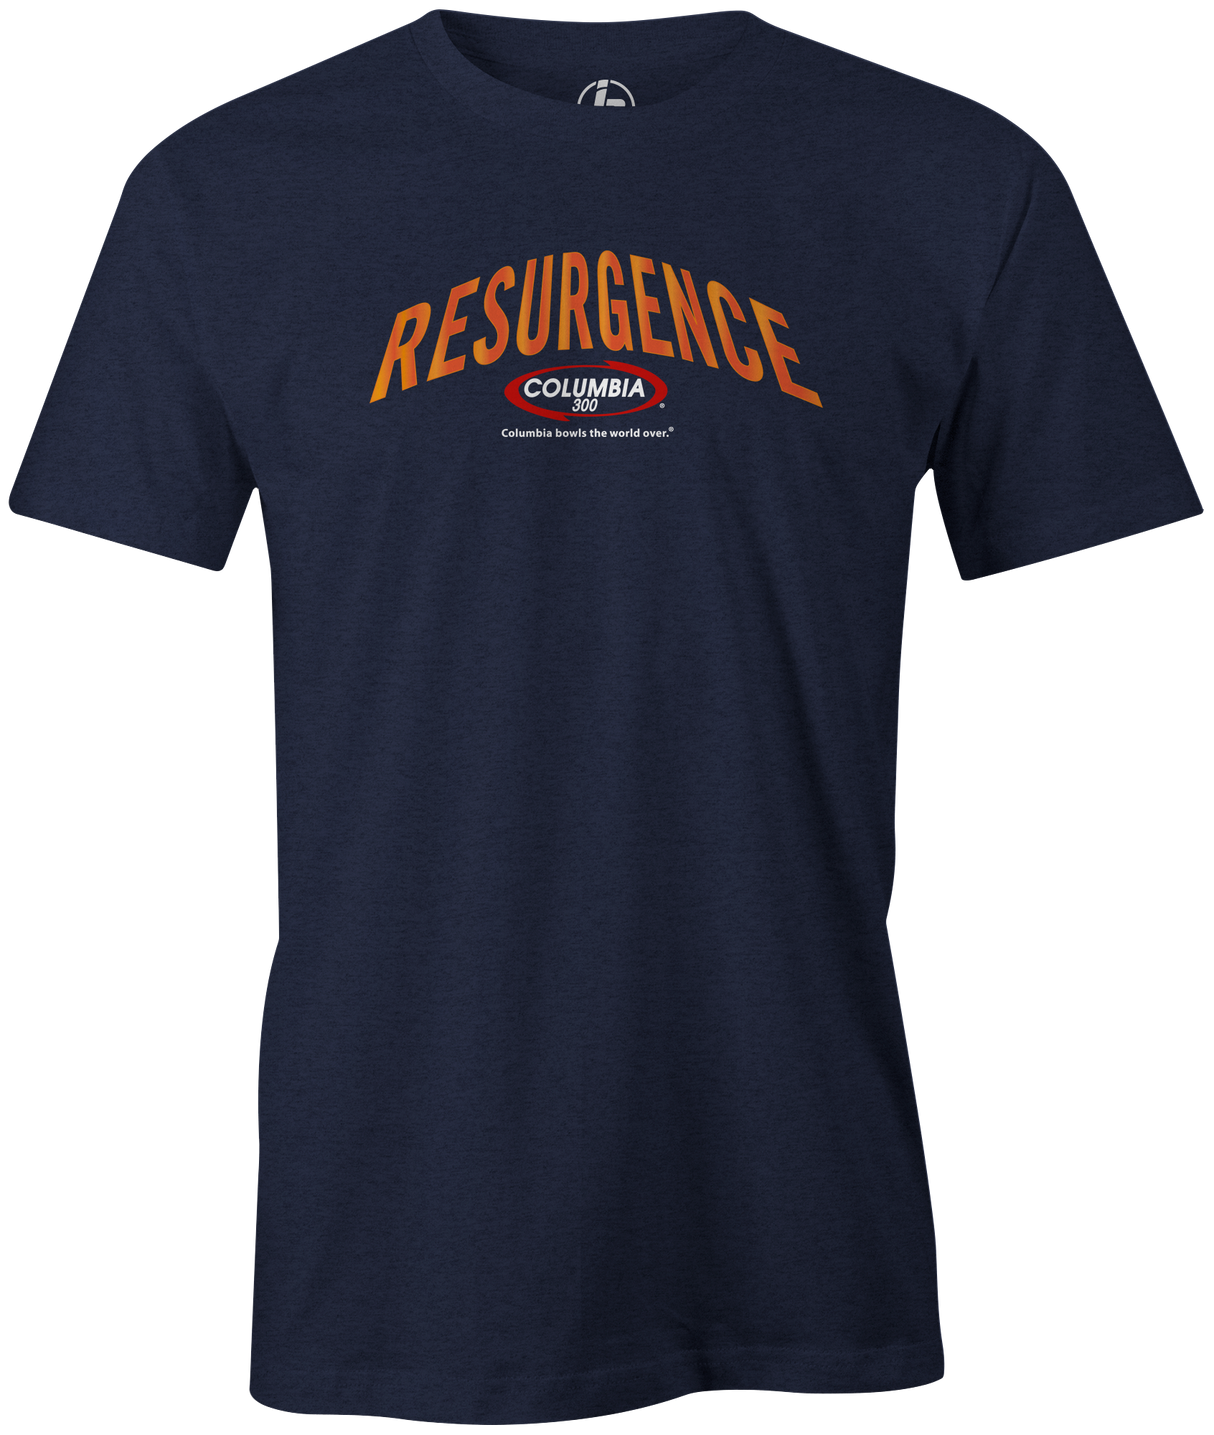 Resurgence Columbia 300 Bowling T-Shirt Navy